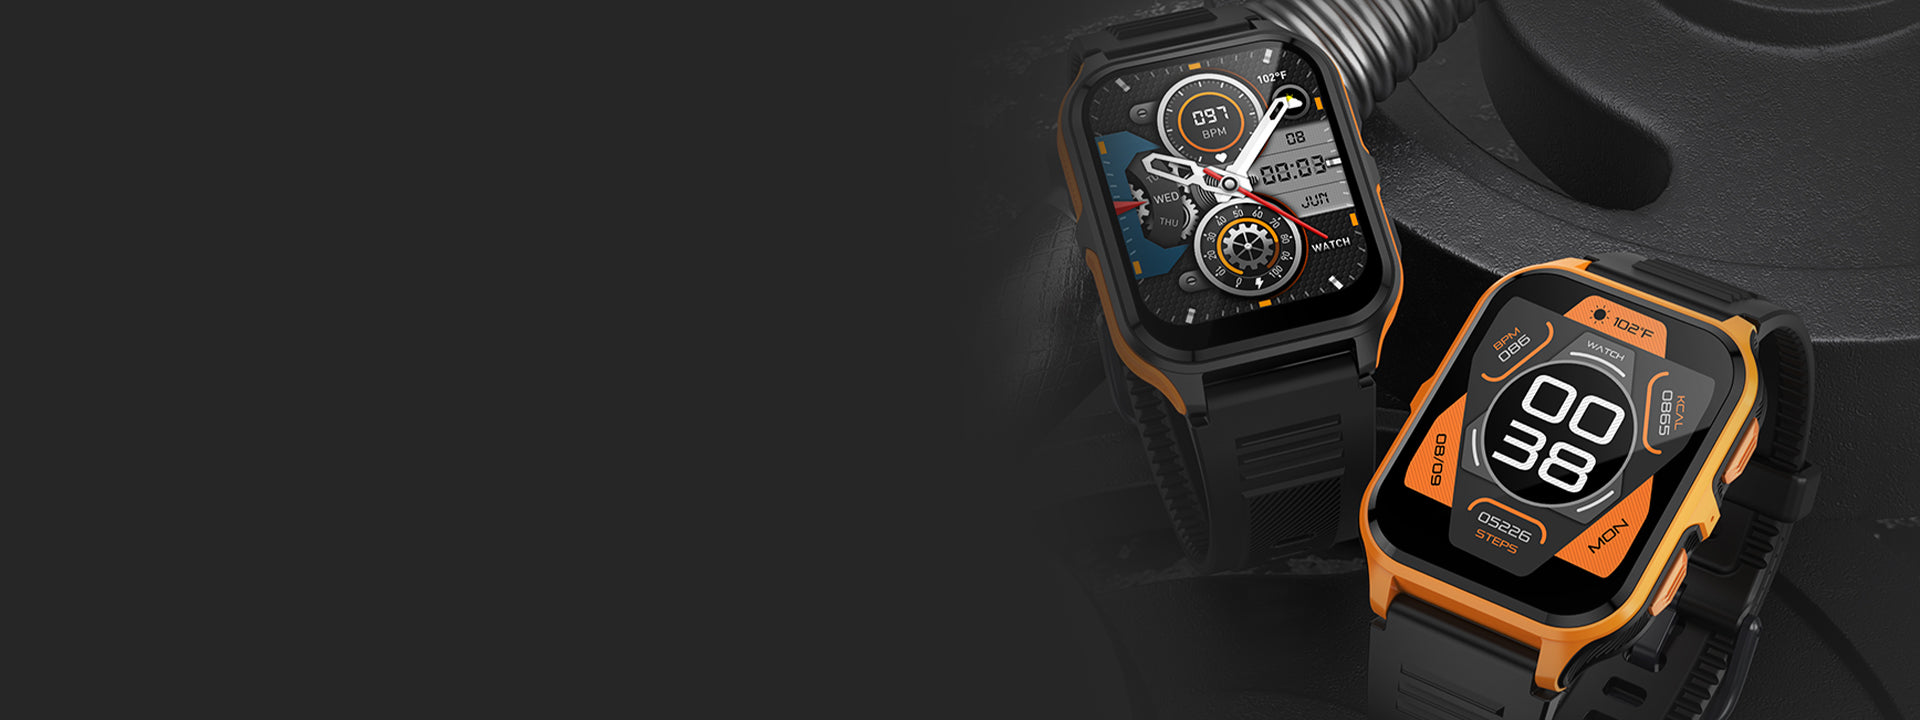 Smart watch COLMI P73 appearance design (1)